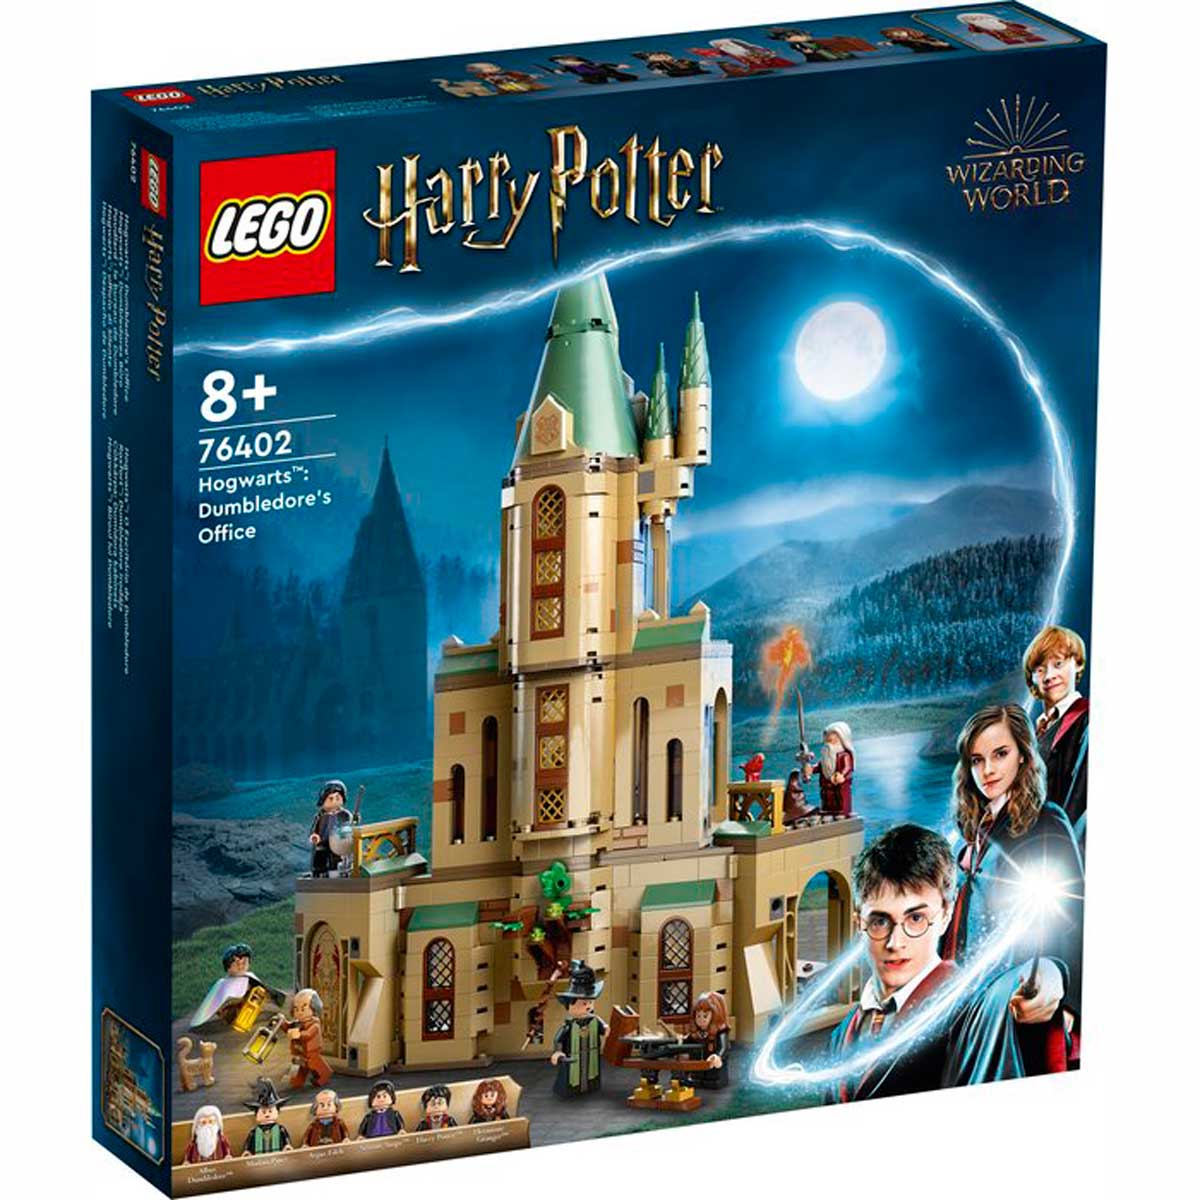 Figuras Harry y Cho Harry Potter solo 13,99€ 